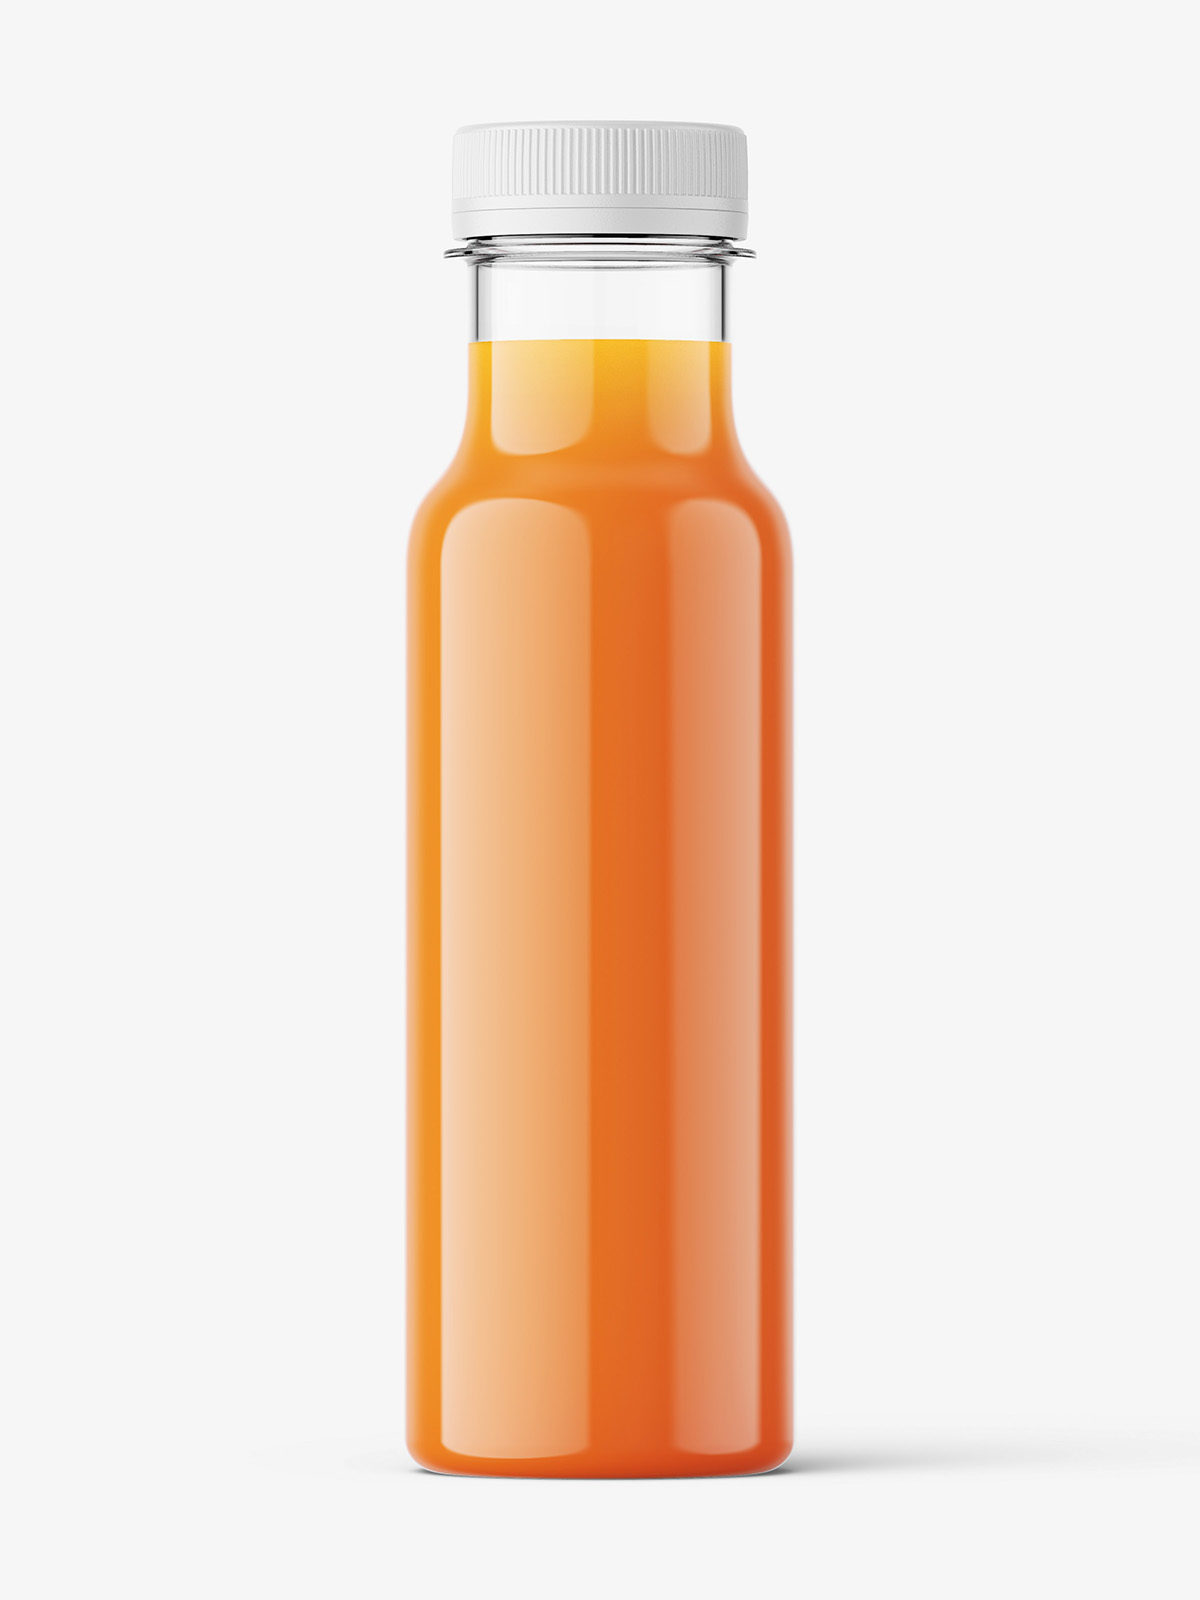 Carrot juice bottle mockup - Smarty Mockups